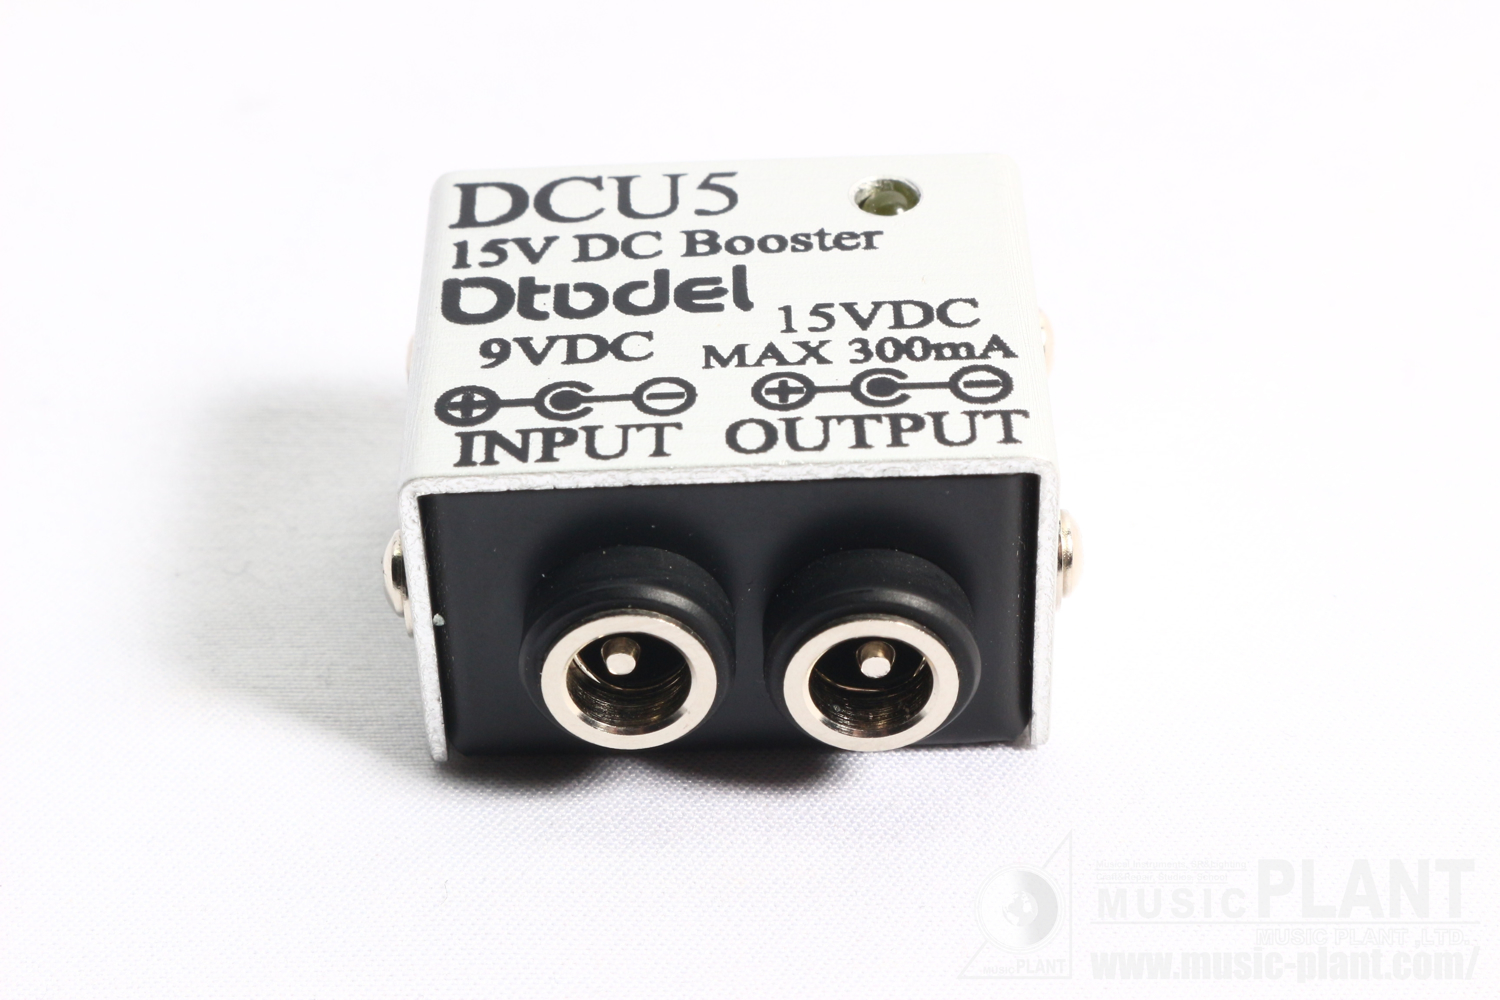 DCU5 15V DC Booster追加画像